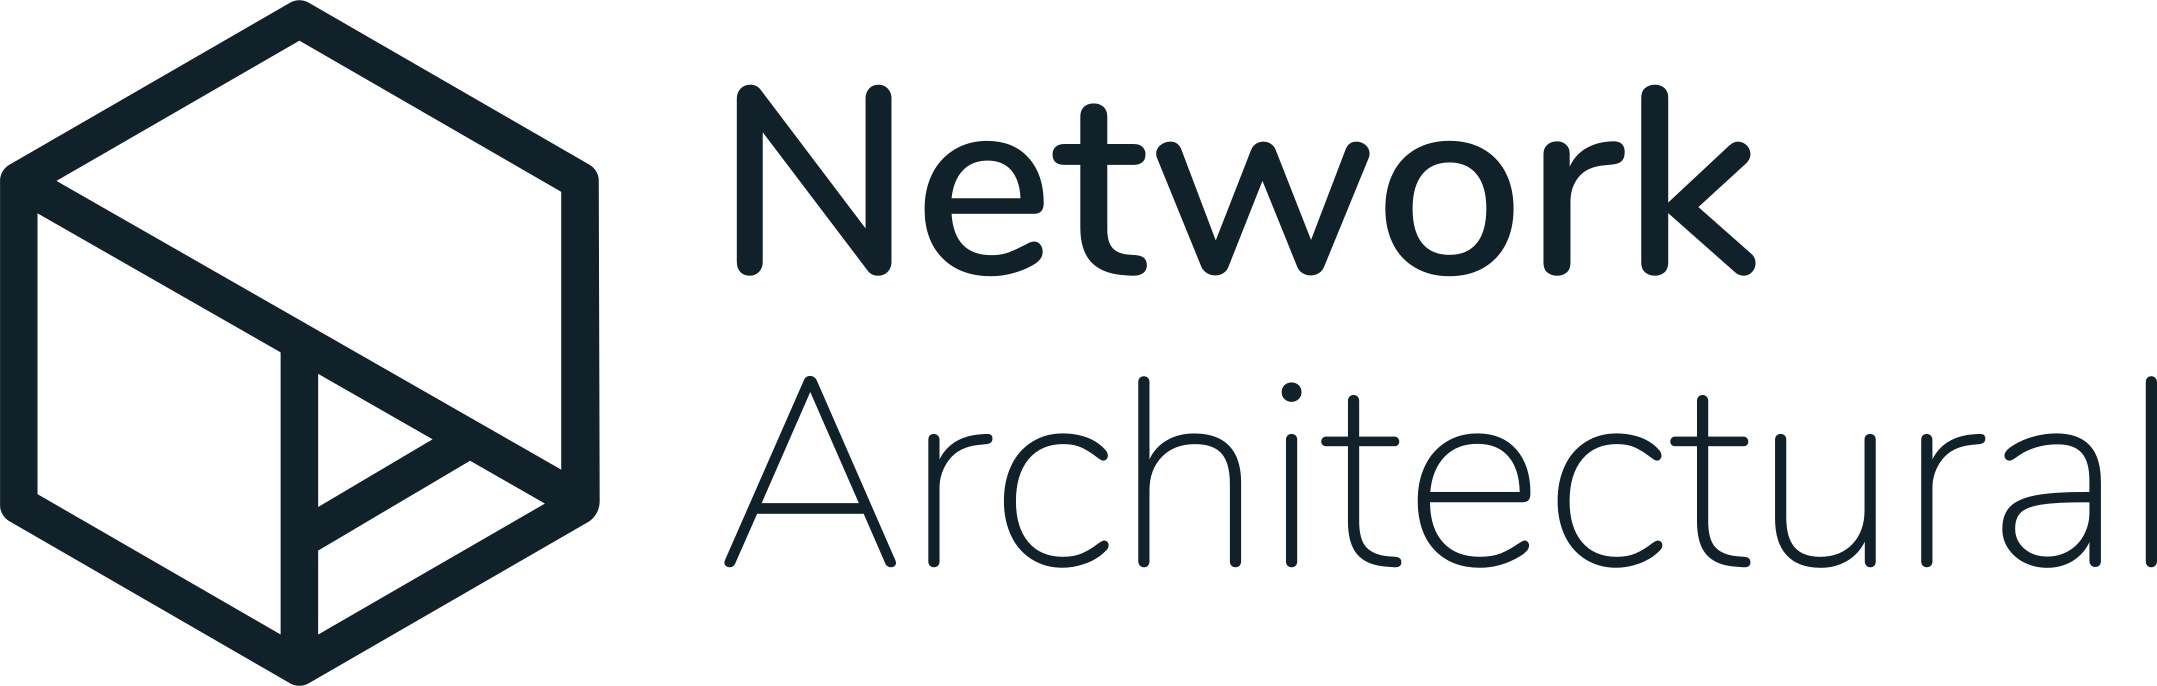 Network Architectural